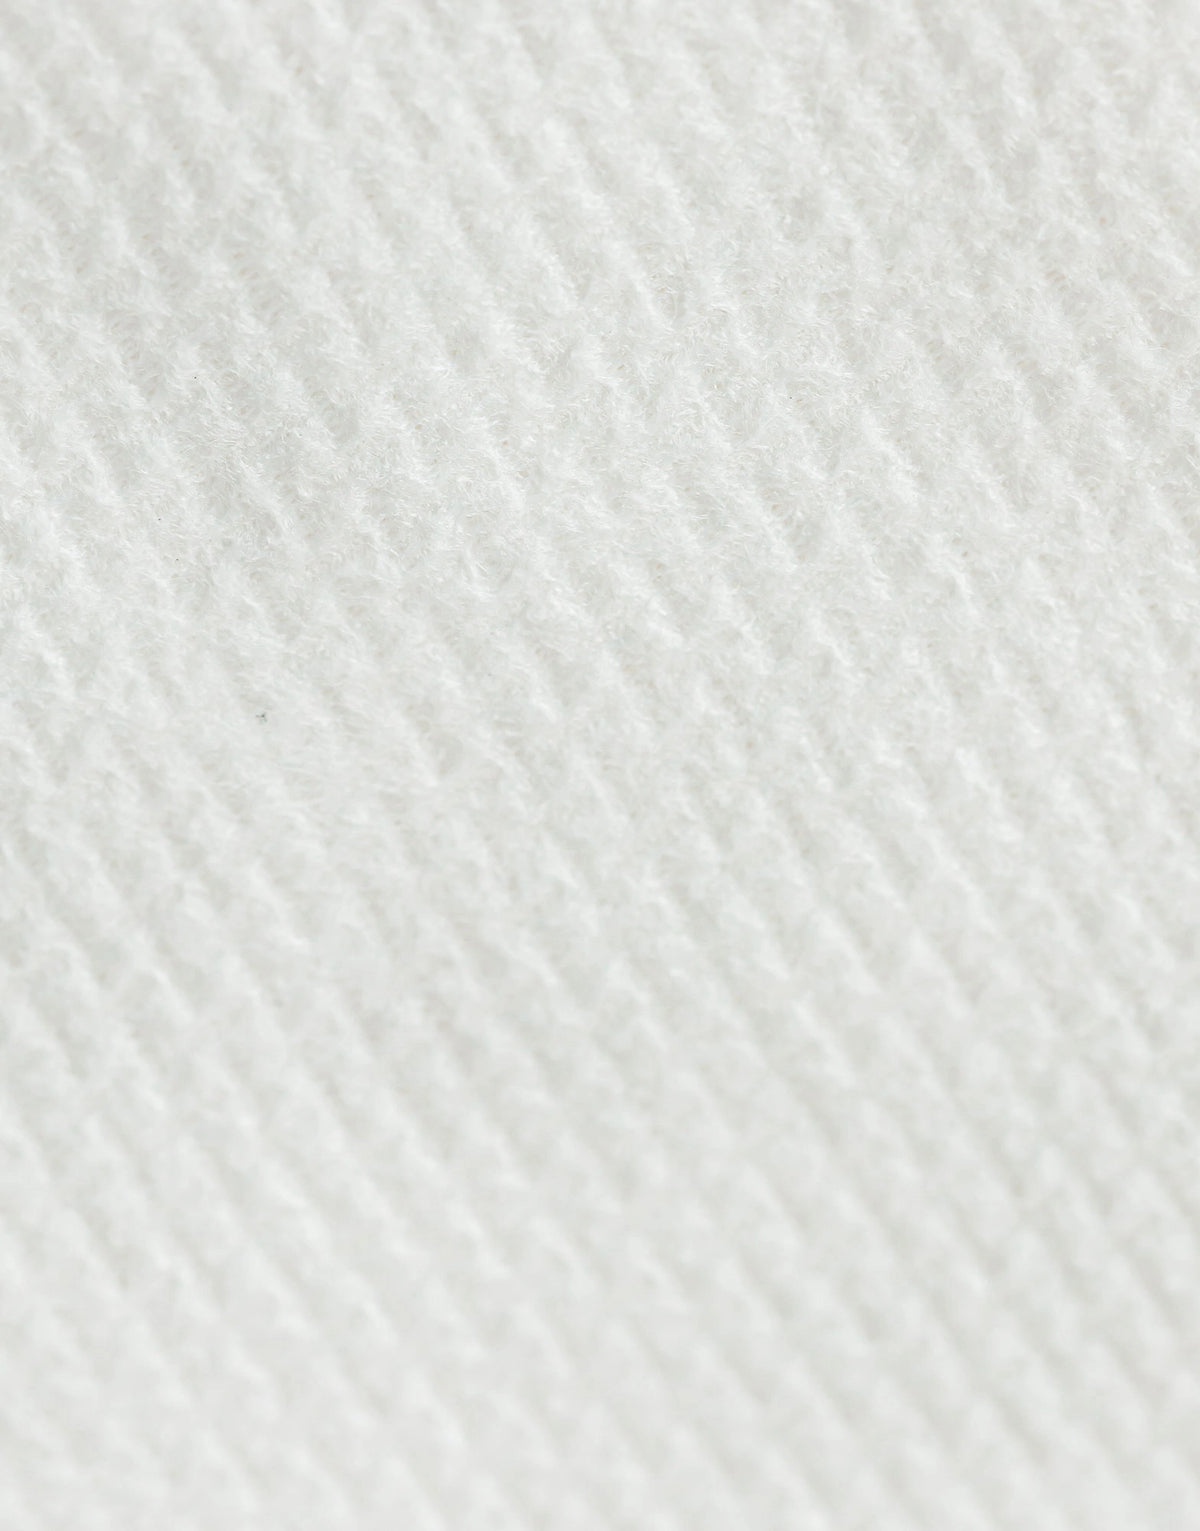 Clean Skin Towel Texture